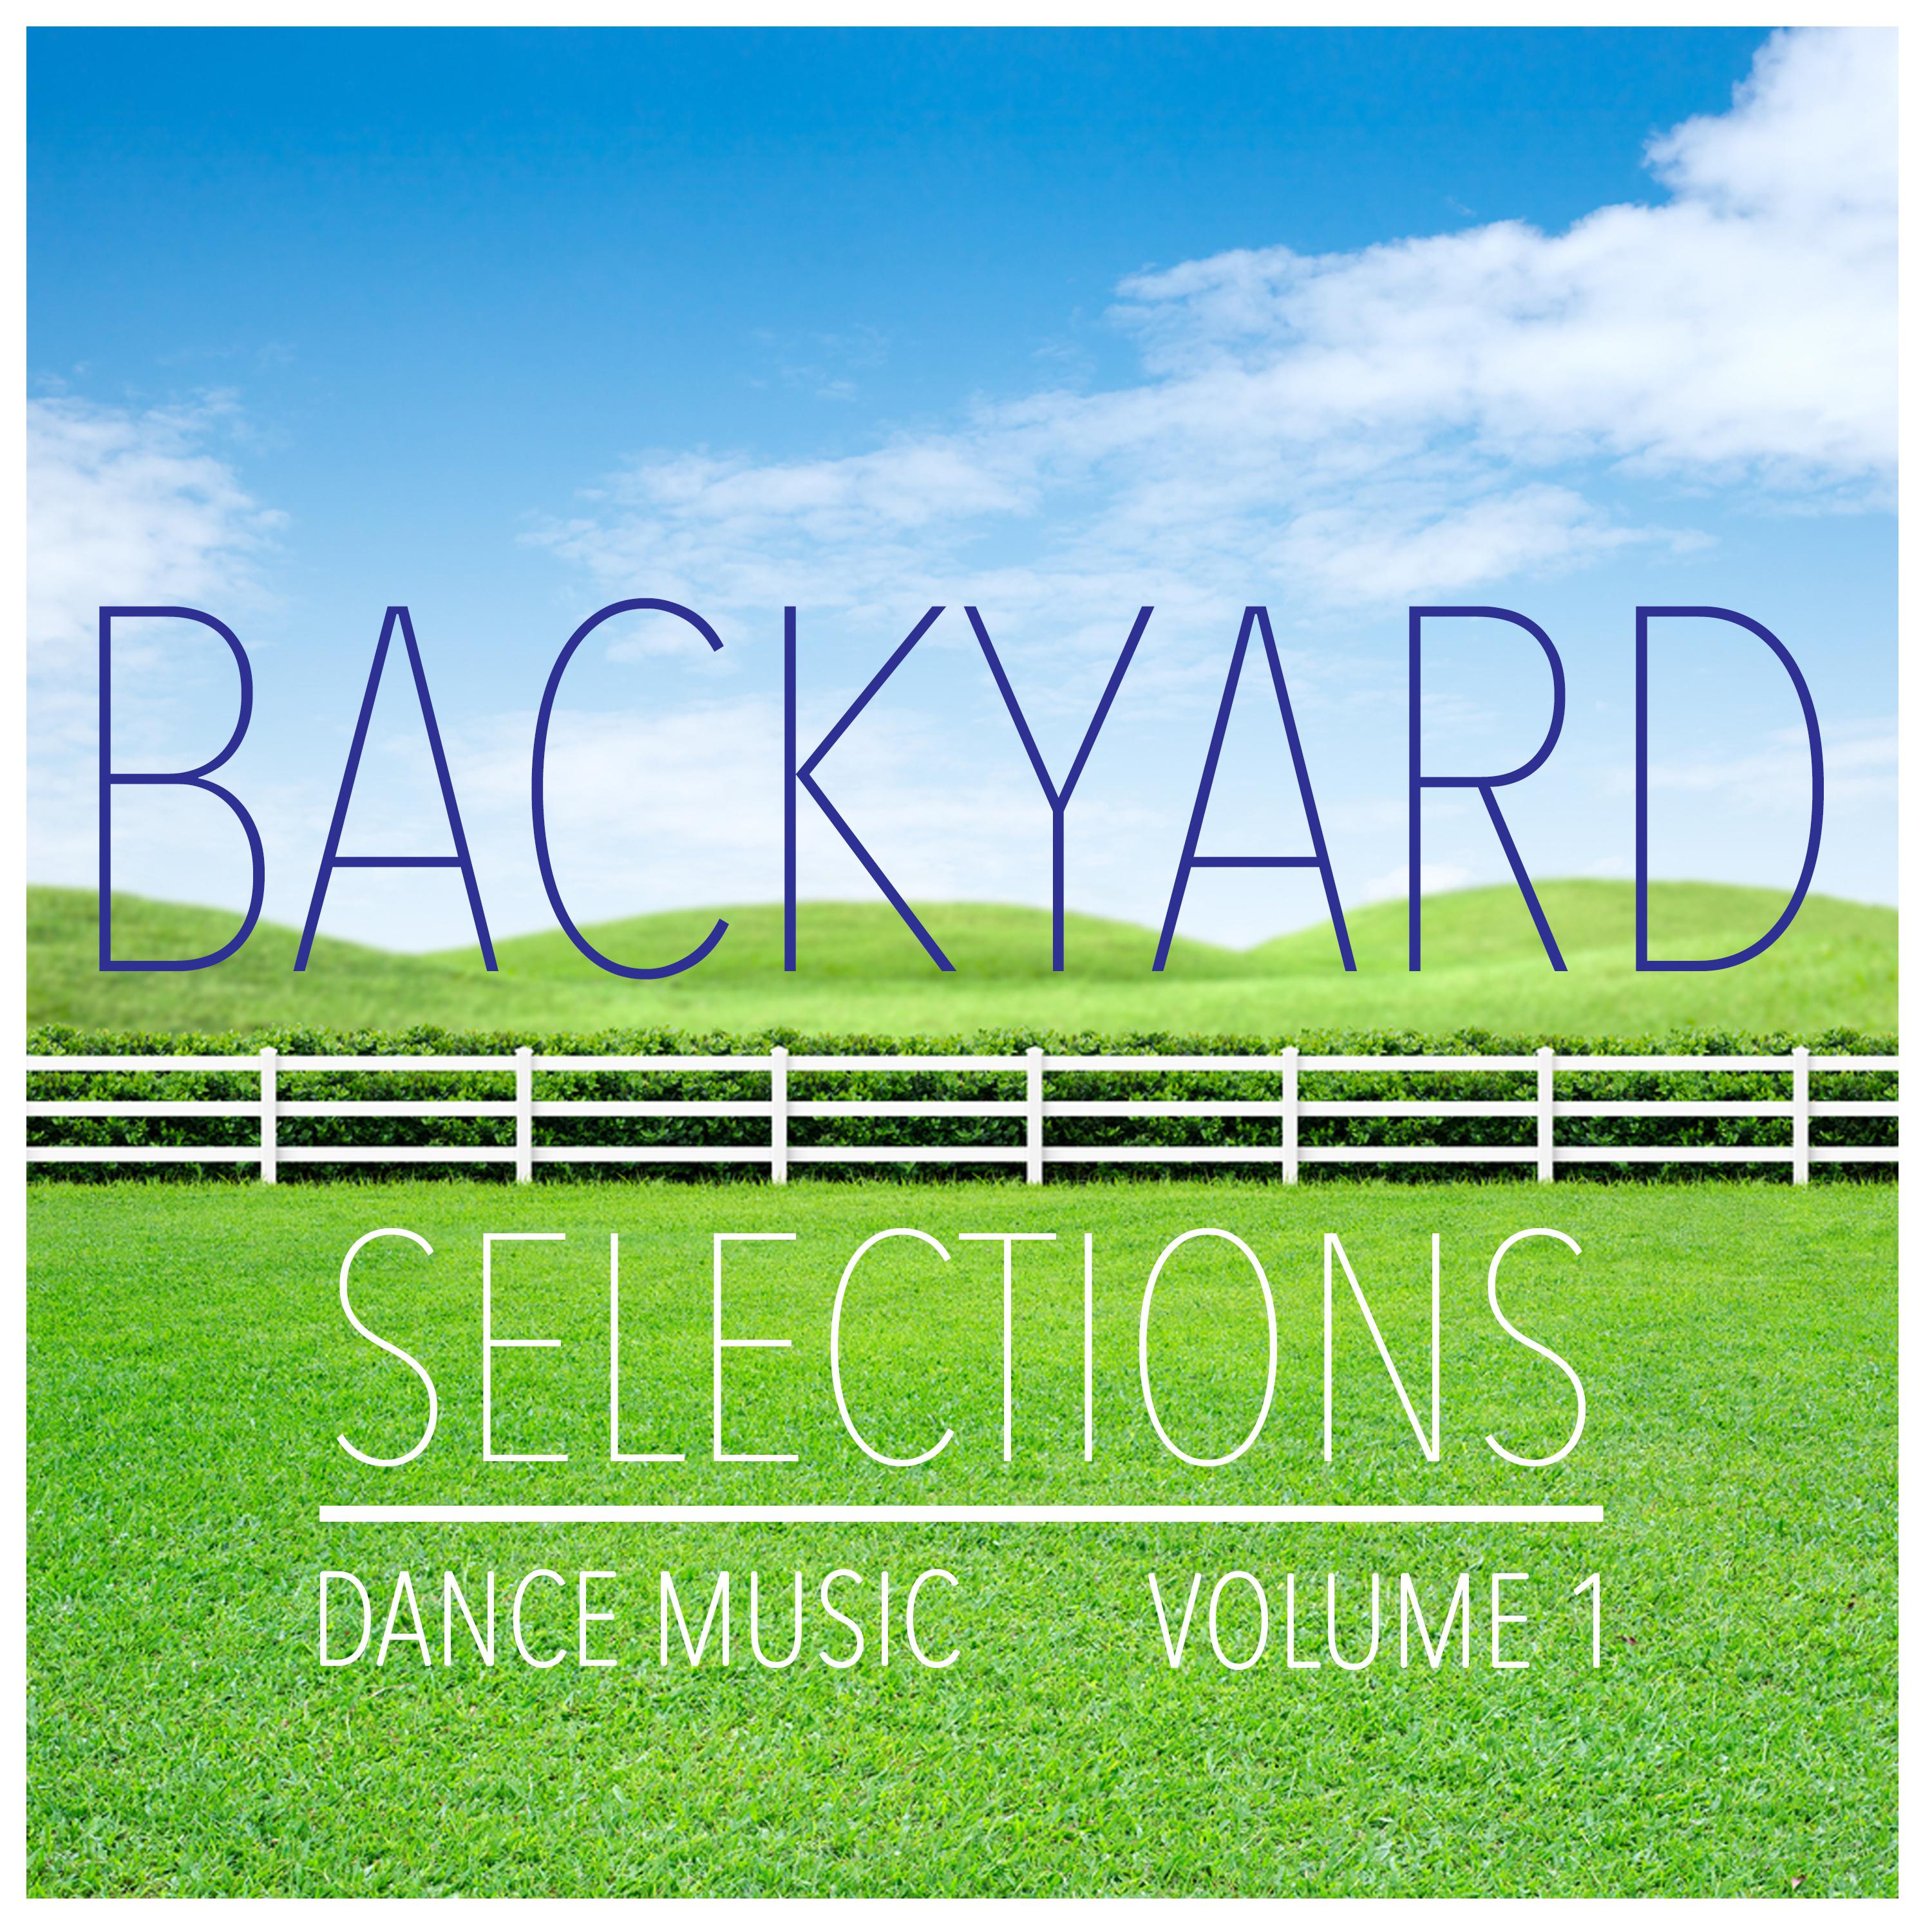 Backyard Selections, Vol. 1 - Selection of Dance Music